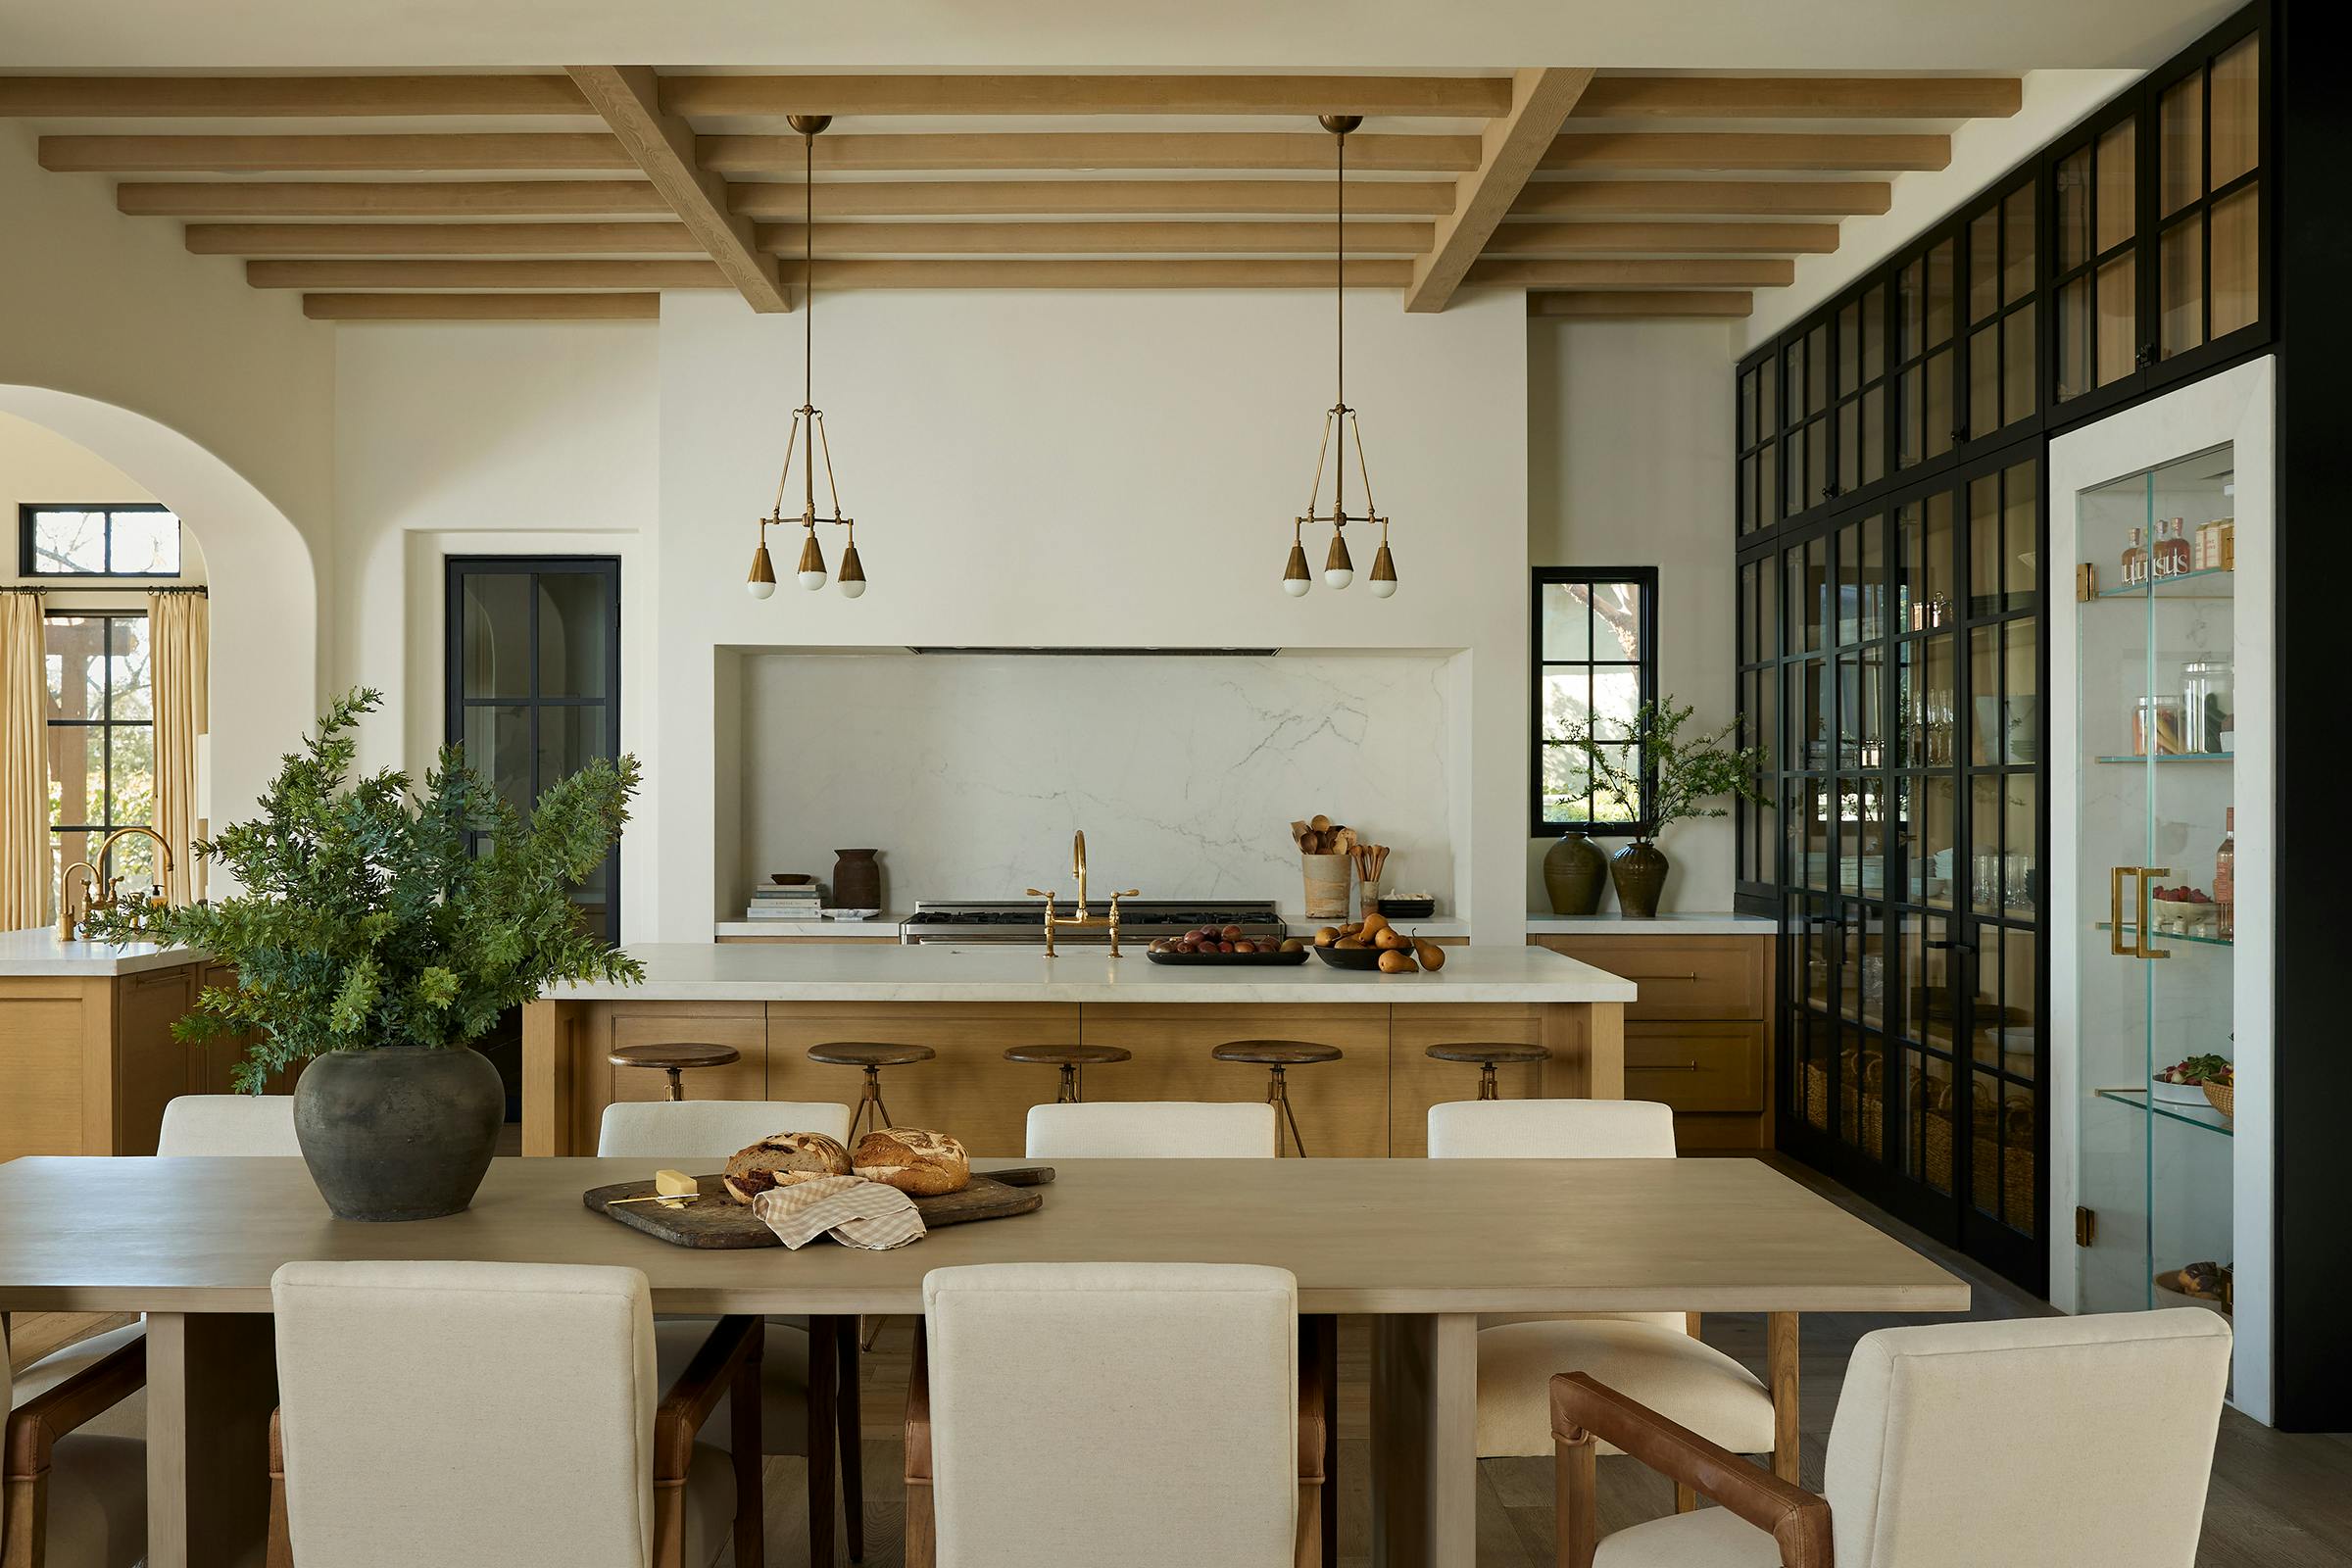 Nicole-Green-Design-Project-Johnson-Residence-Kitchen